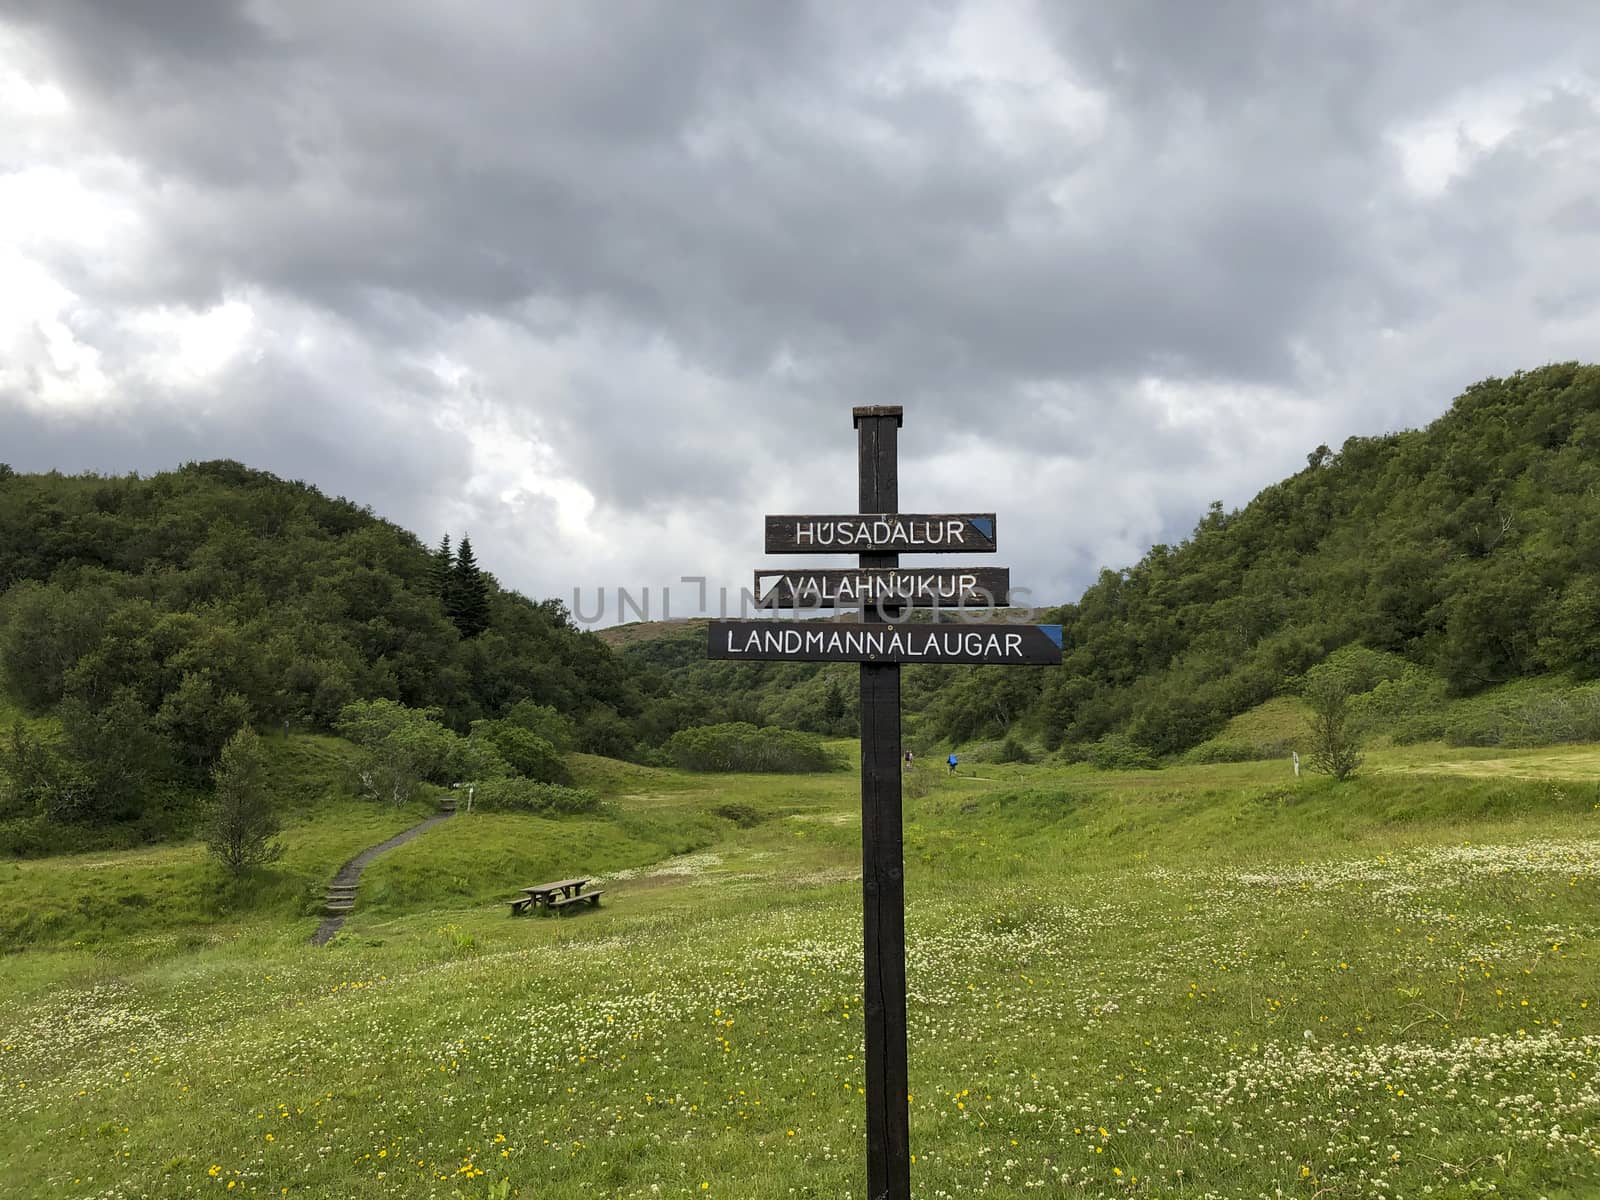 Directional sign pole on Laugavegur hiking trail, pointing to husadalur, landmannalaugar, valahnukur by kb79